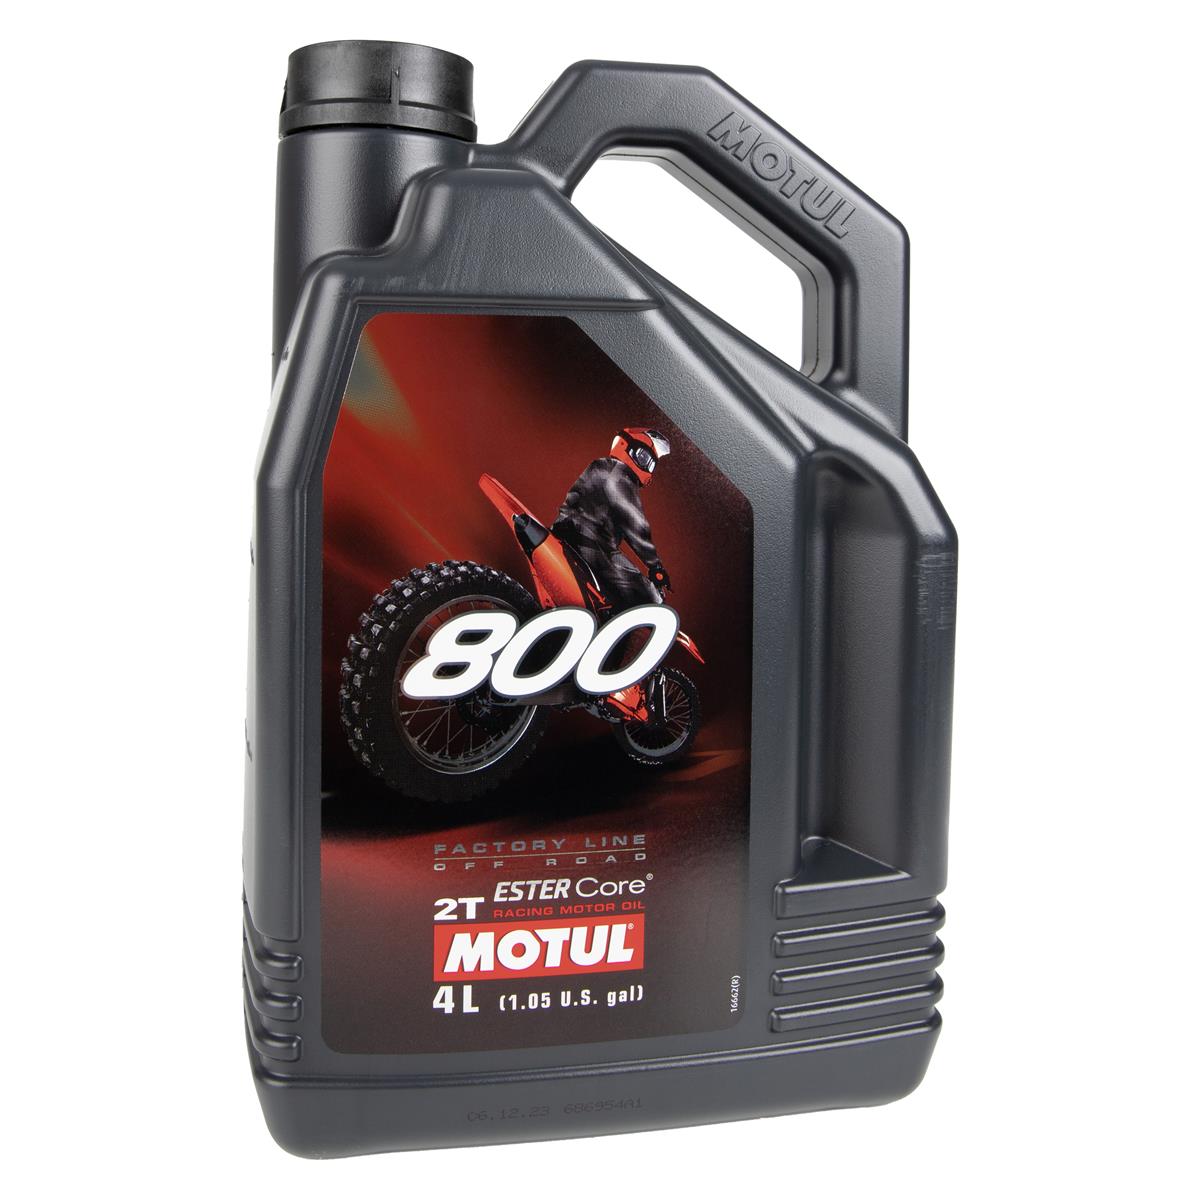 Motul Motorenöl Offroad 800